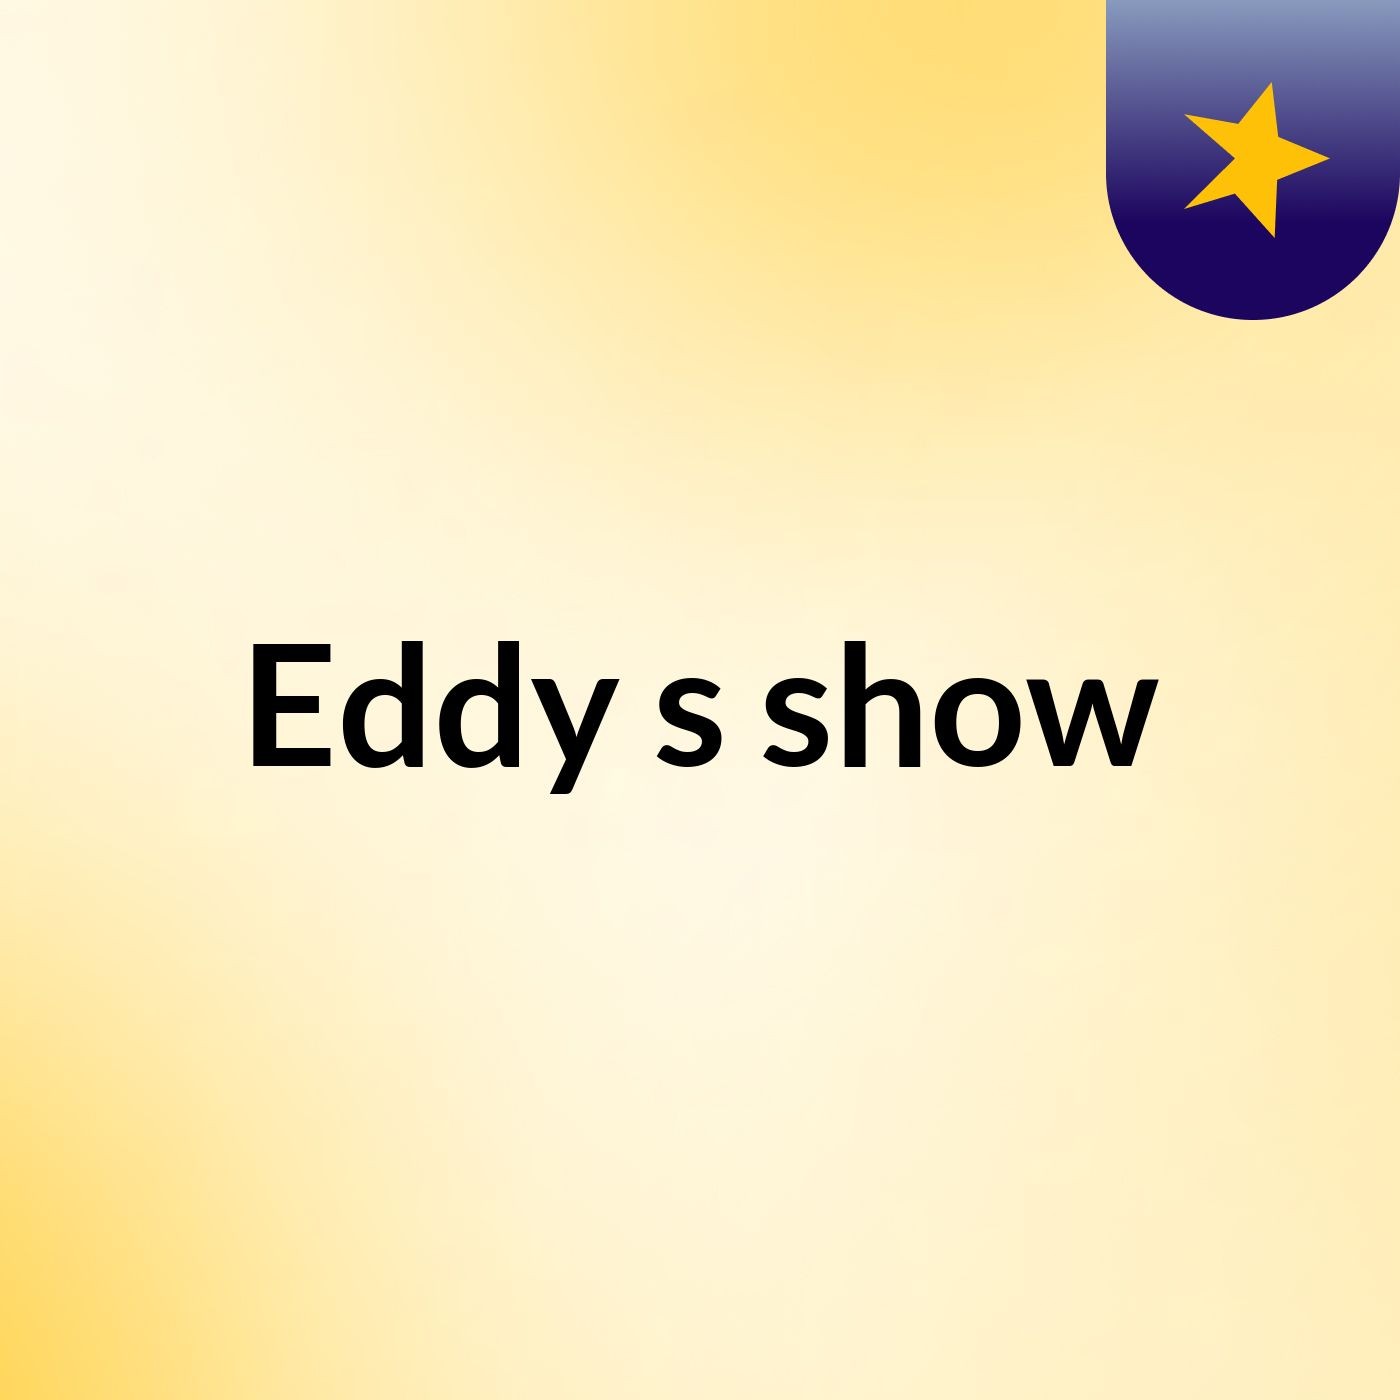 Eddy's show